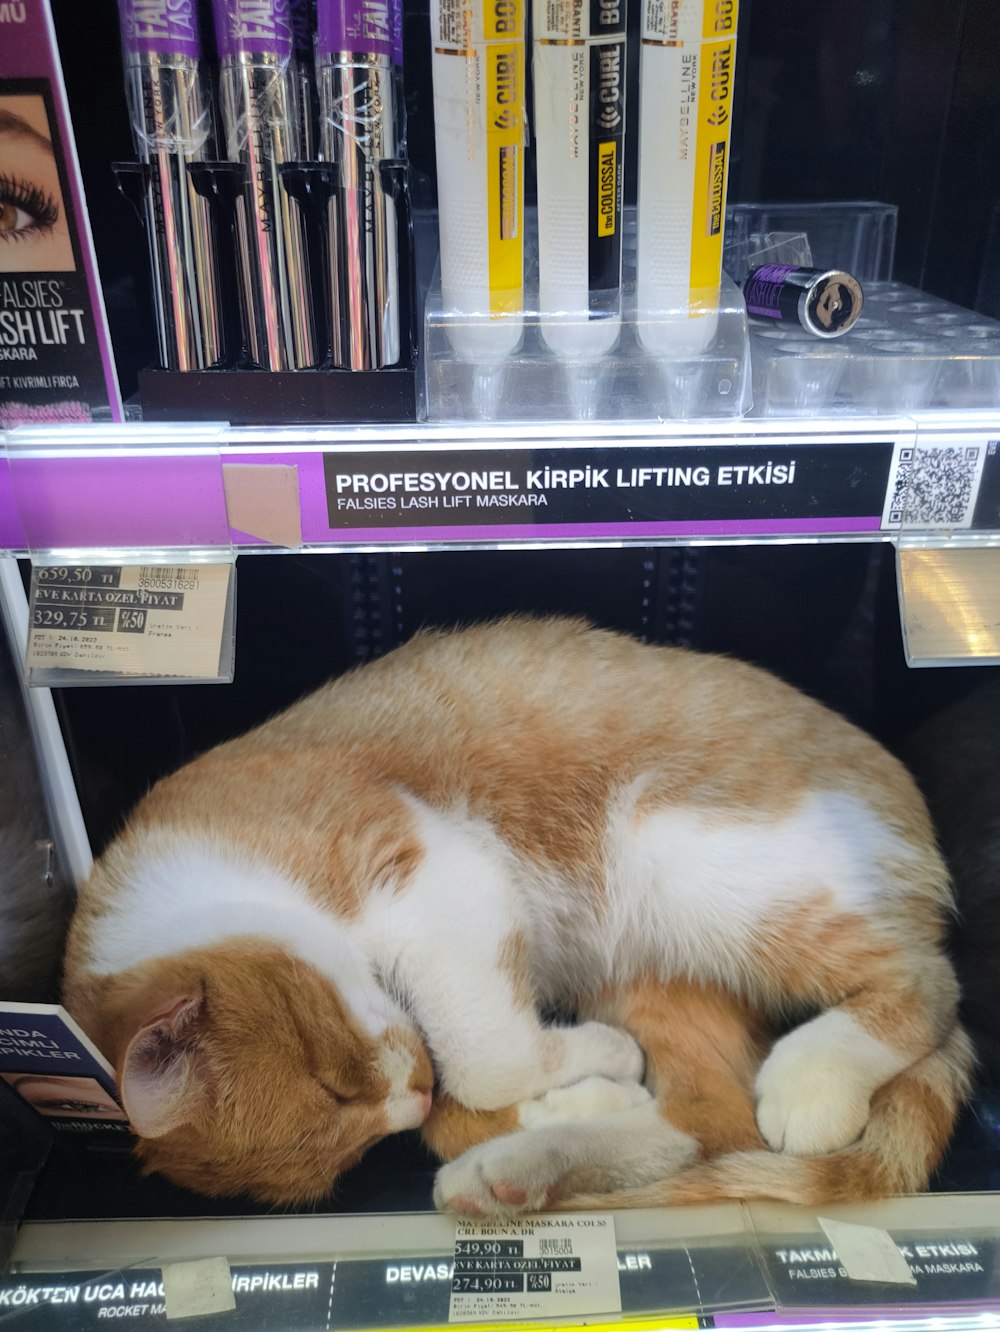 a cat sleeping on a shelf in a store